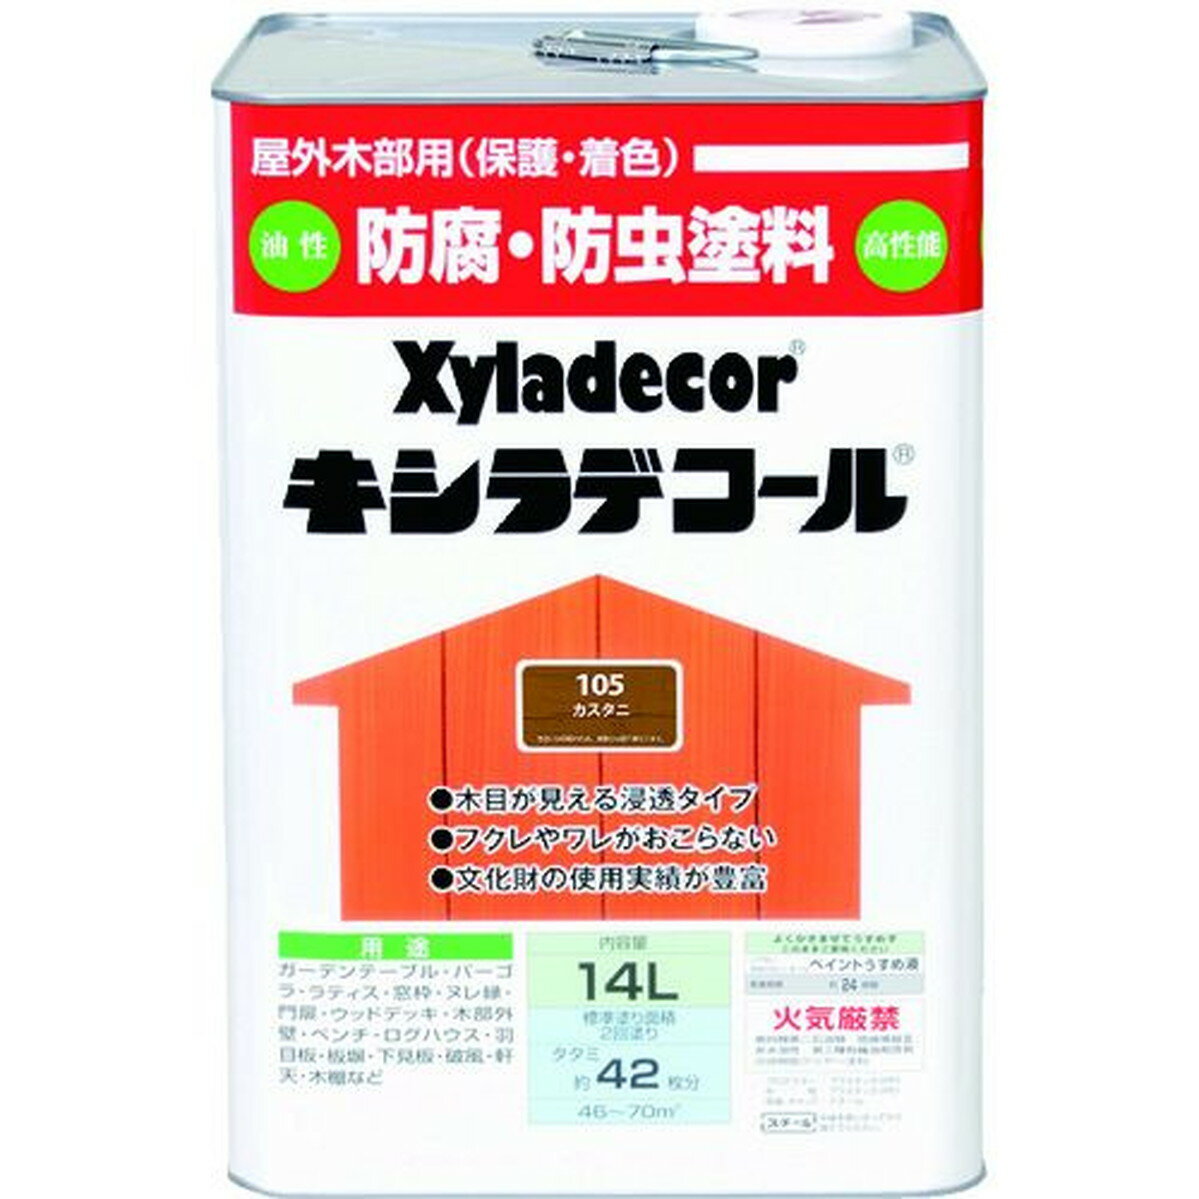 KANSAI キシラデコール カスタニ 14L 1缶 (00017670300000)